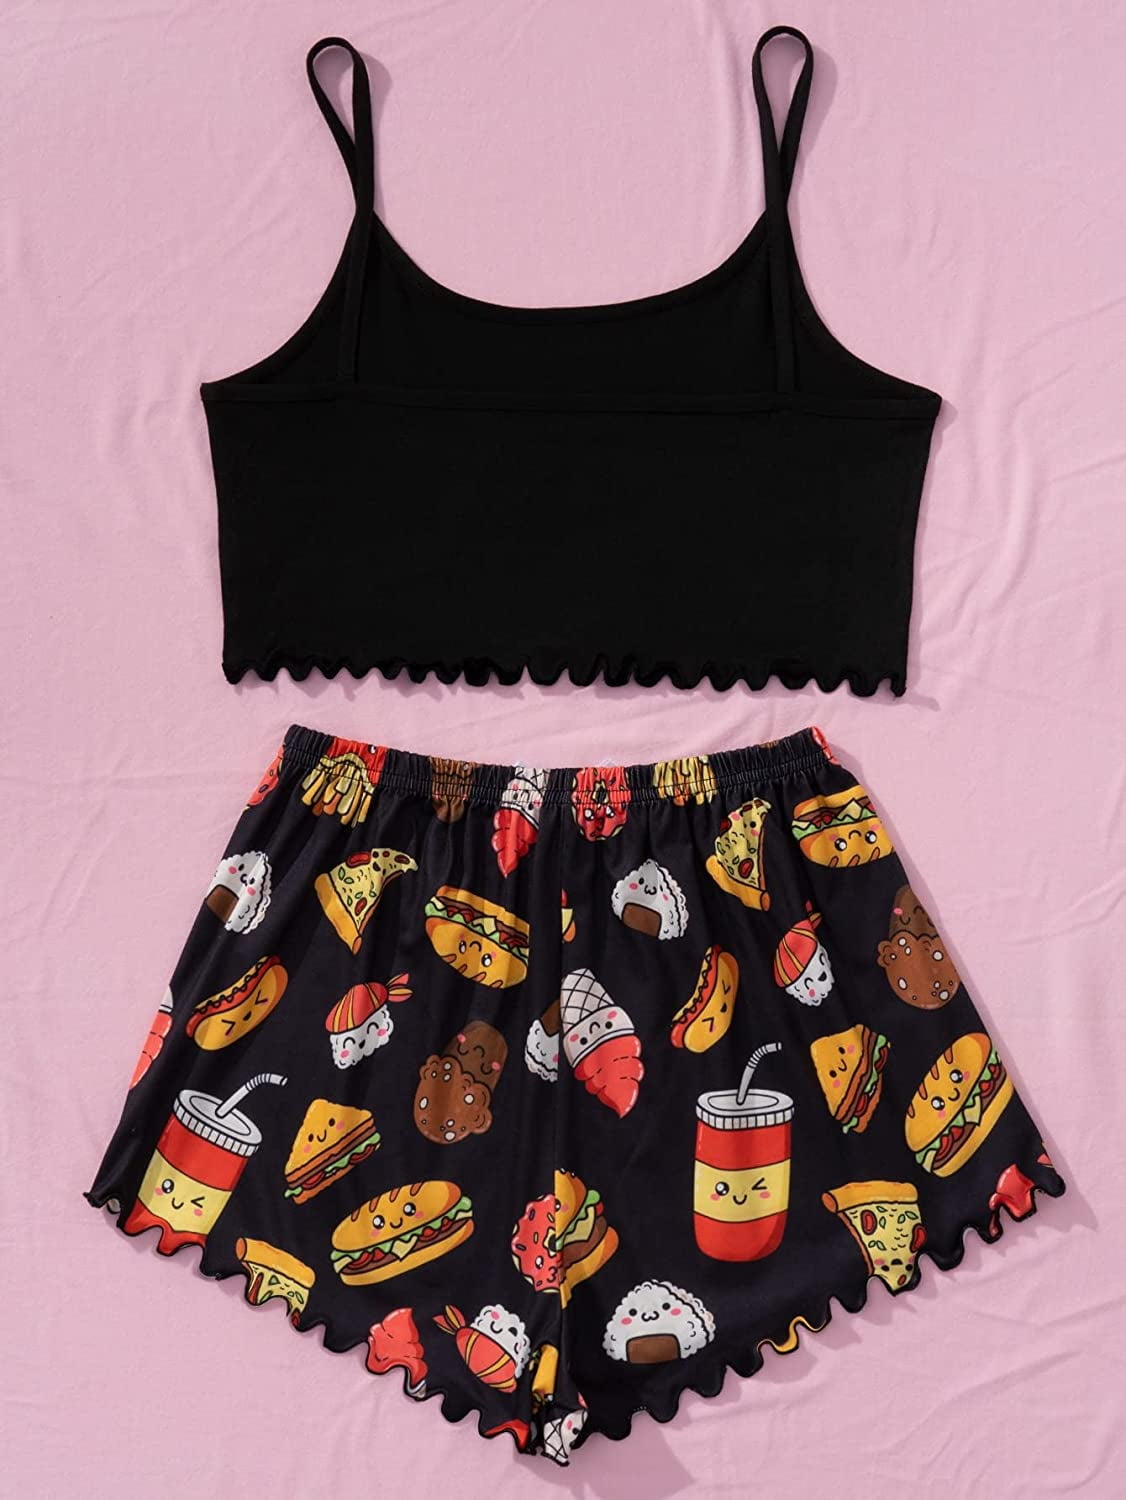 WDIRARA Women's Sleepwear Cute Print Lettuce Trim Cami and Shorts